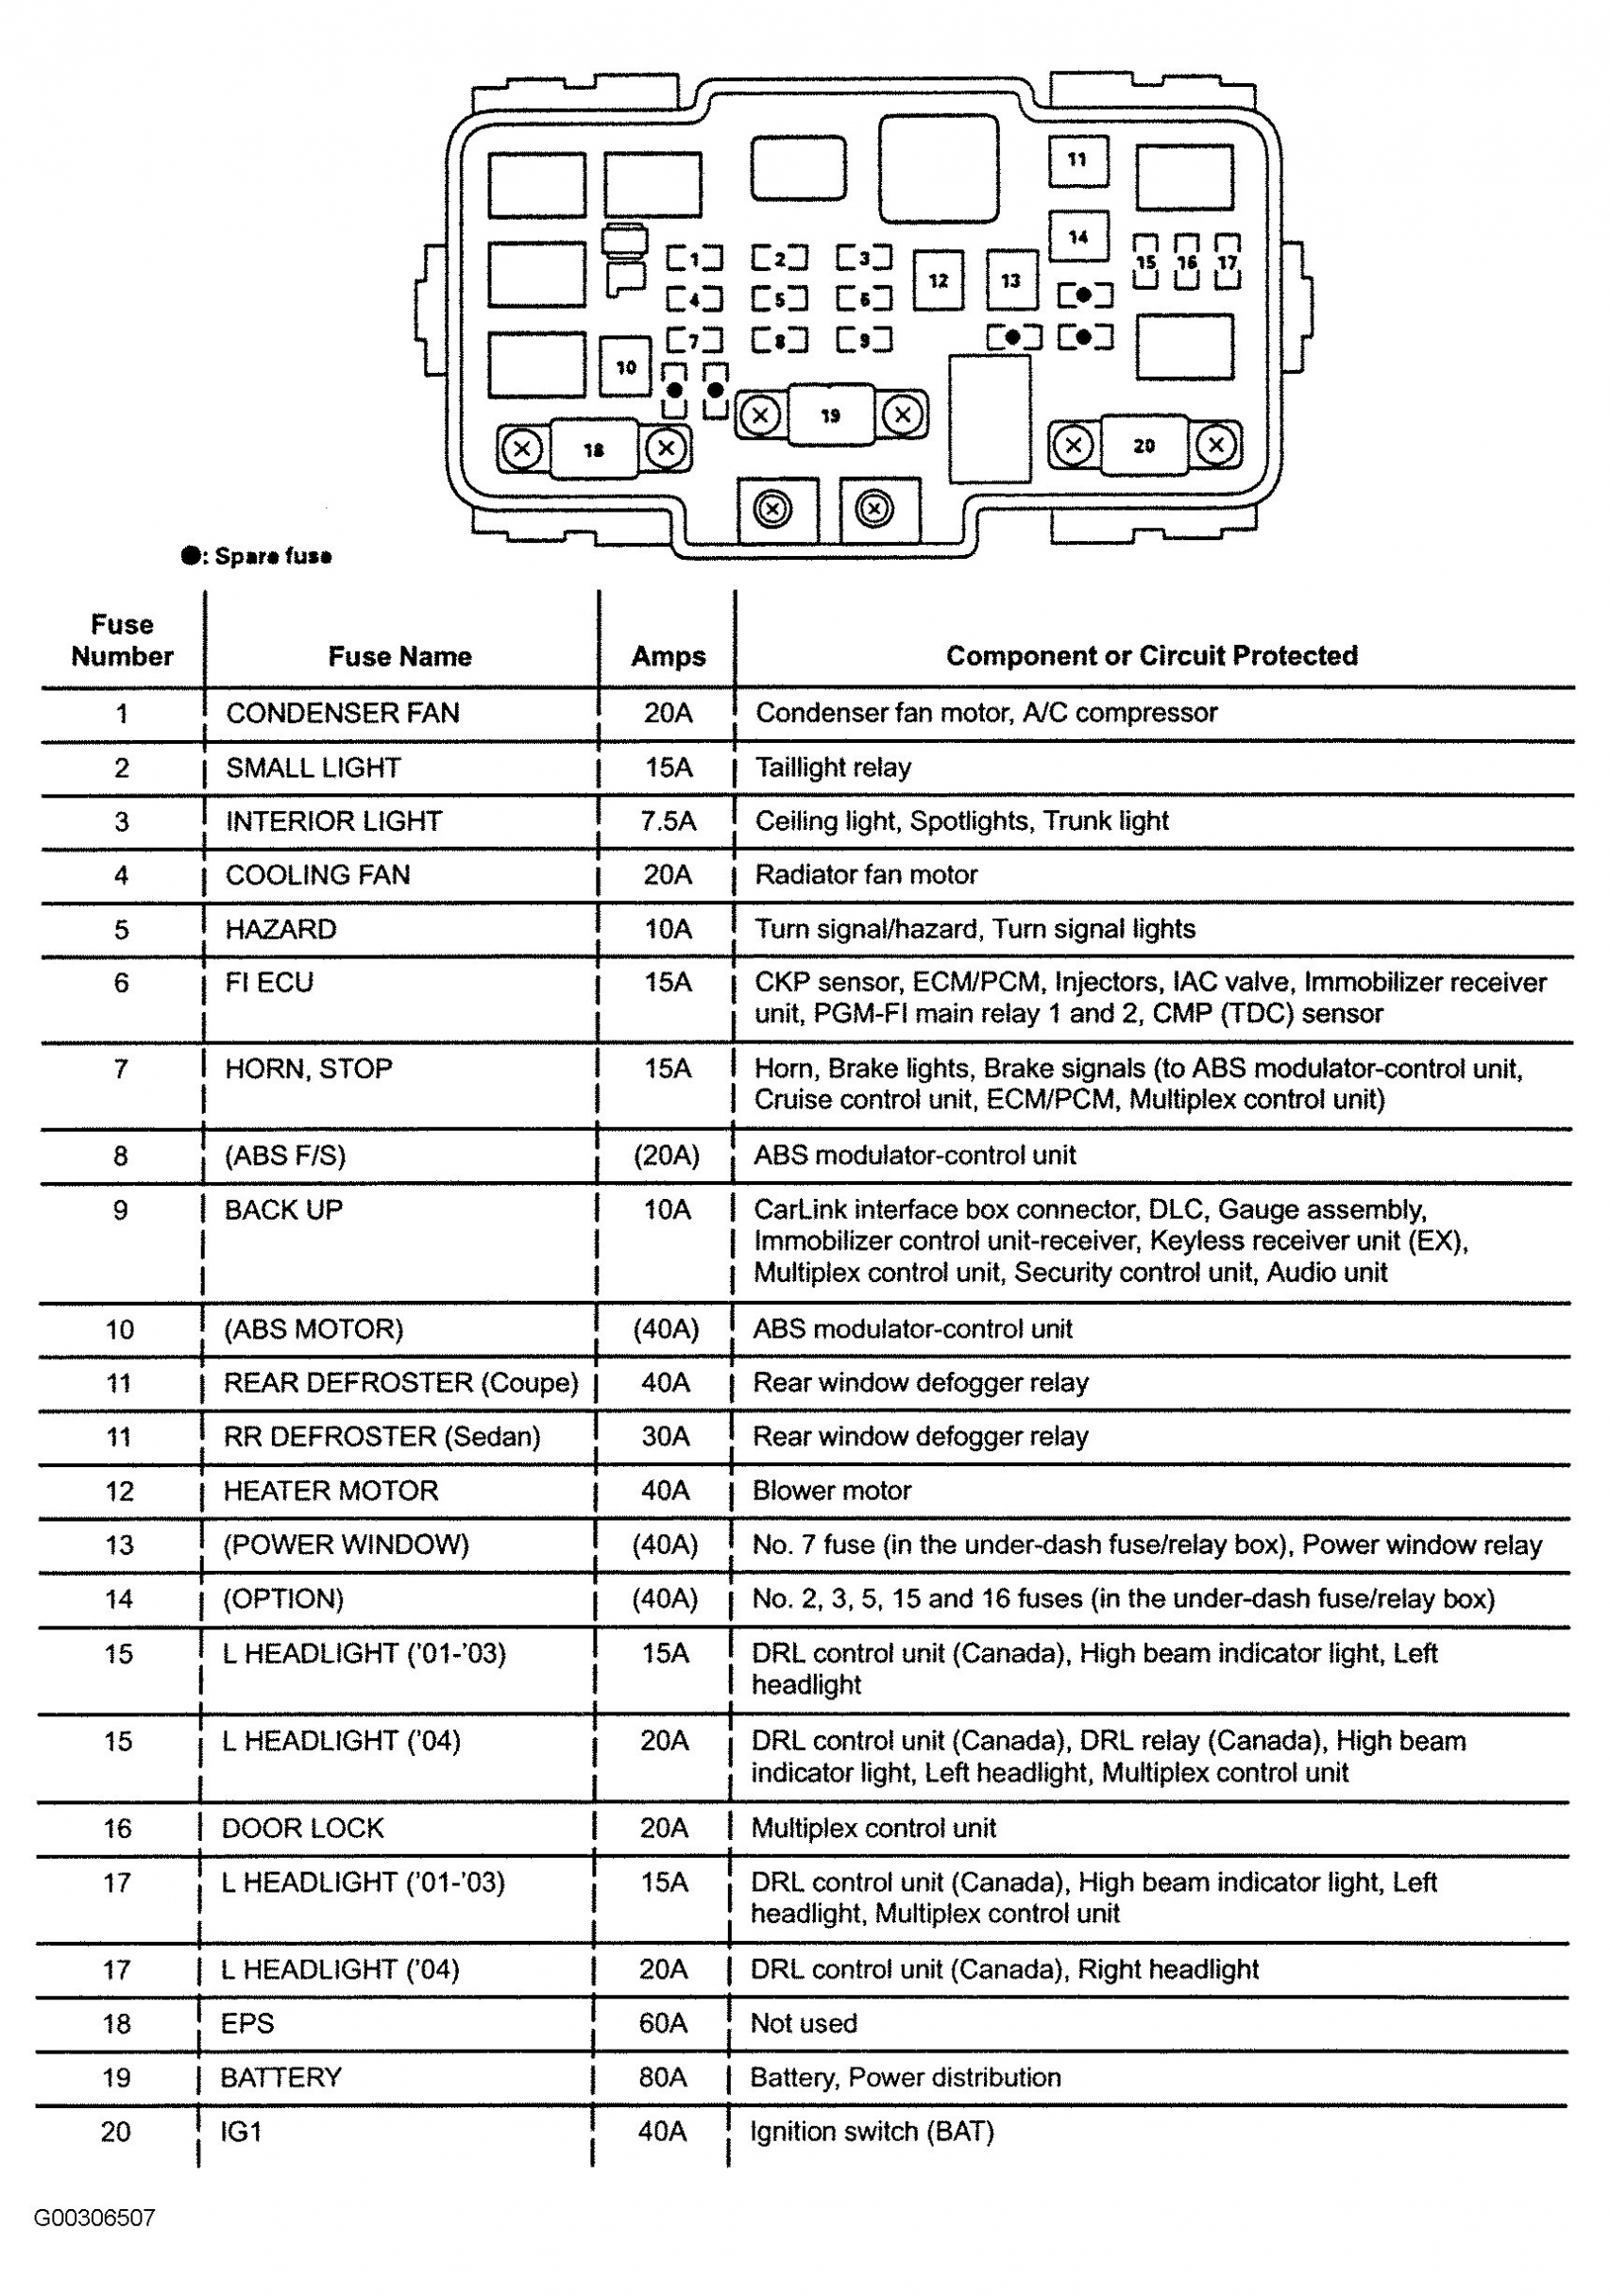 2008 Honda Civic Fuse Box Diagram Fuse Box In Honda Civic Wiring Diagram Sessions